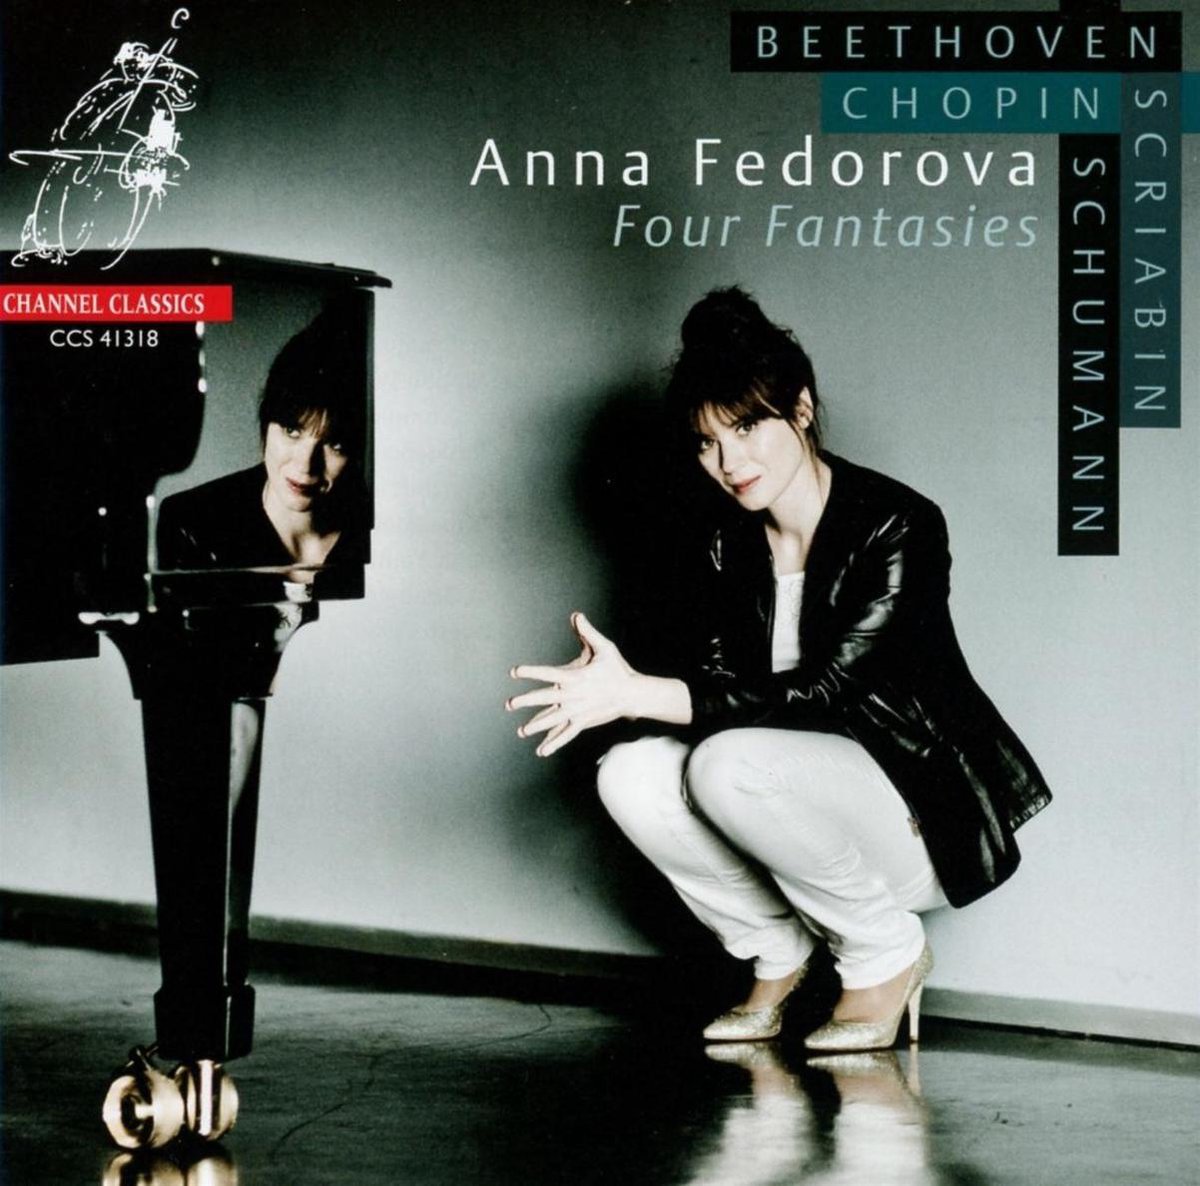 Beethoven: Four Fantasties - Anna Fedorova